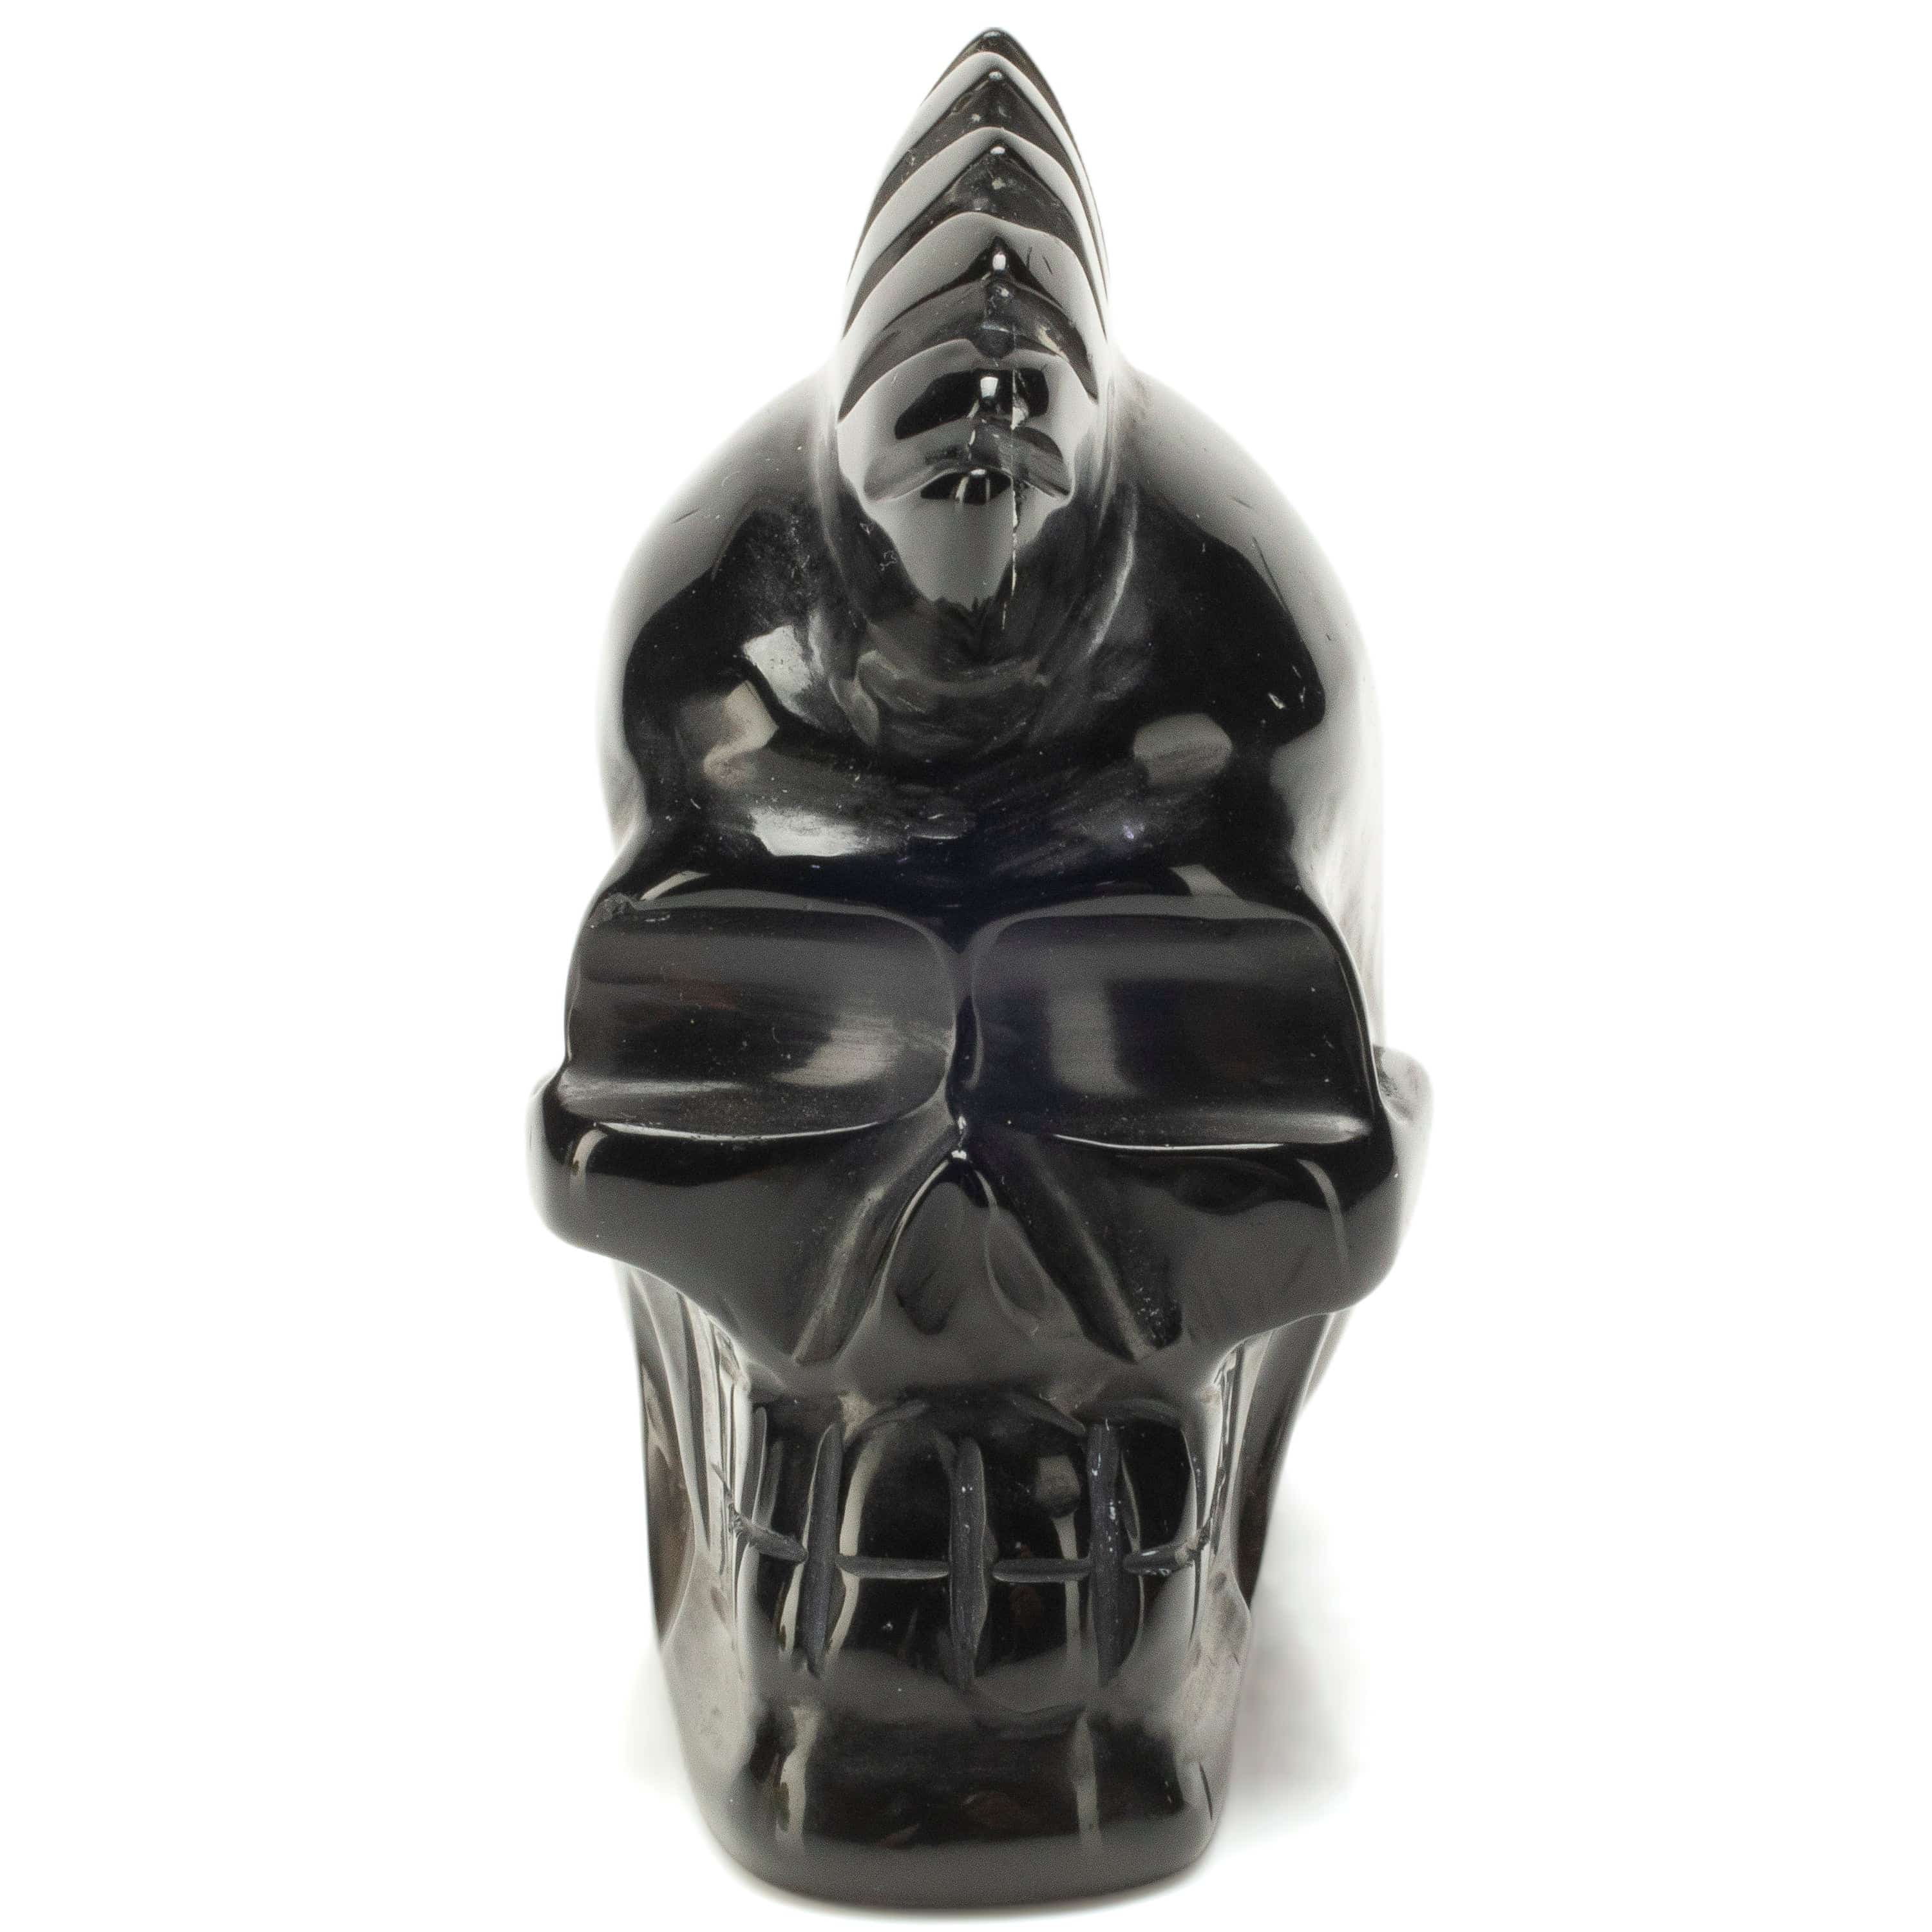 KALIFANO Smoky Quartz Smoky Quartz Skull Carving from Brazil - 3" / 300 grams SK1440.002